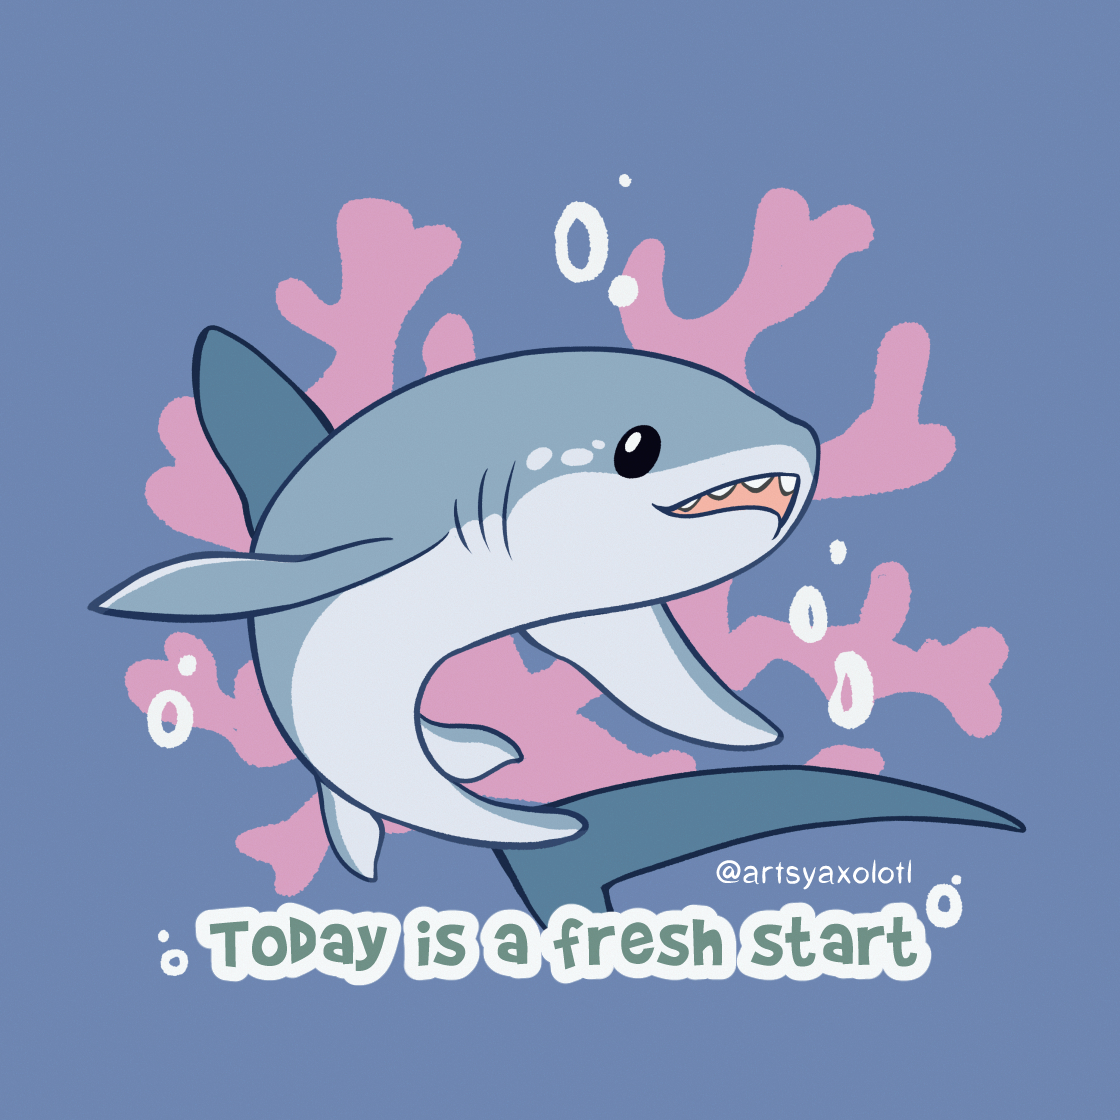 Have a little positivity for #SharkAwarenessDay 🦈☀️